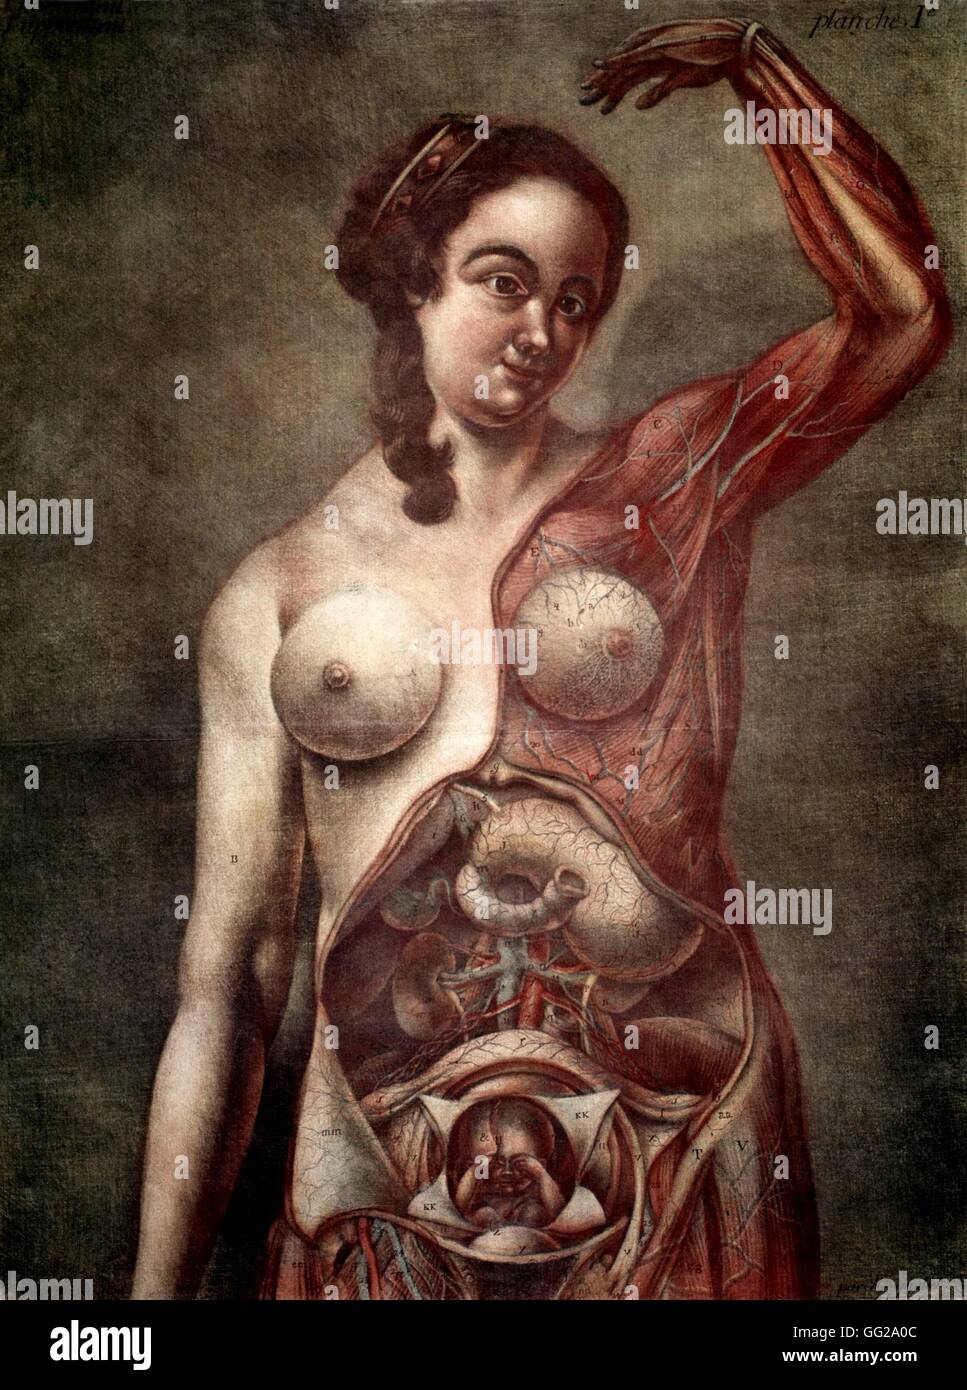 Gautier d'Agoty Woman's Anatomy 18th century Medicine Stock Photo